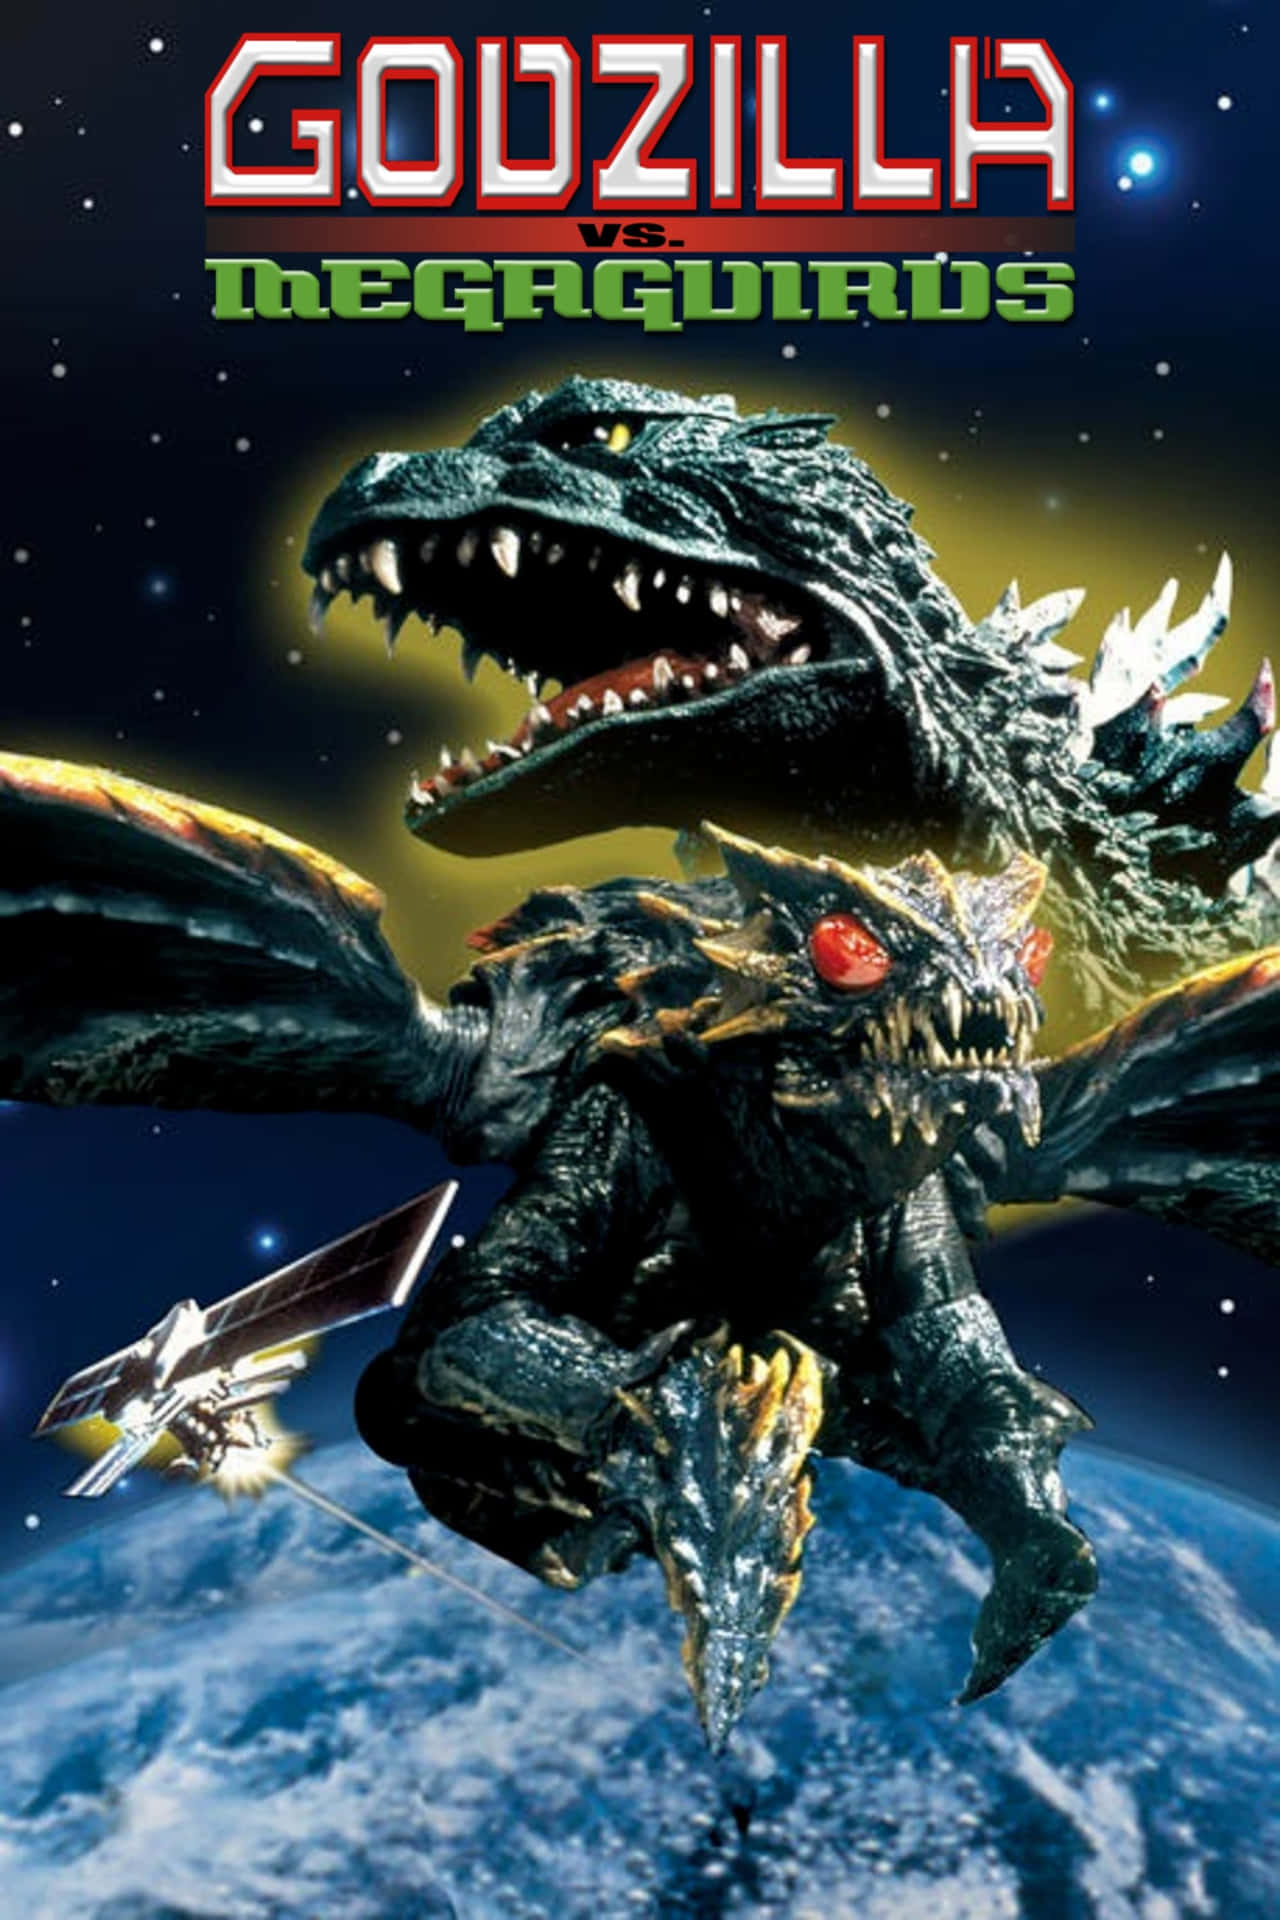 Godzilla facing off against Megaguirus in an epic battle Wallpaper